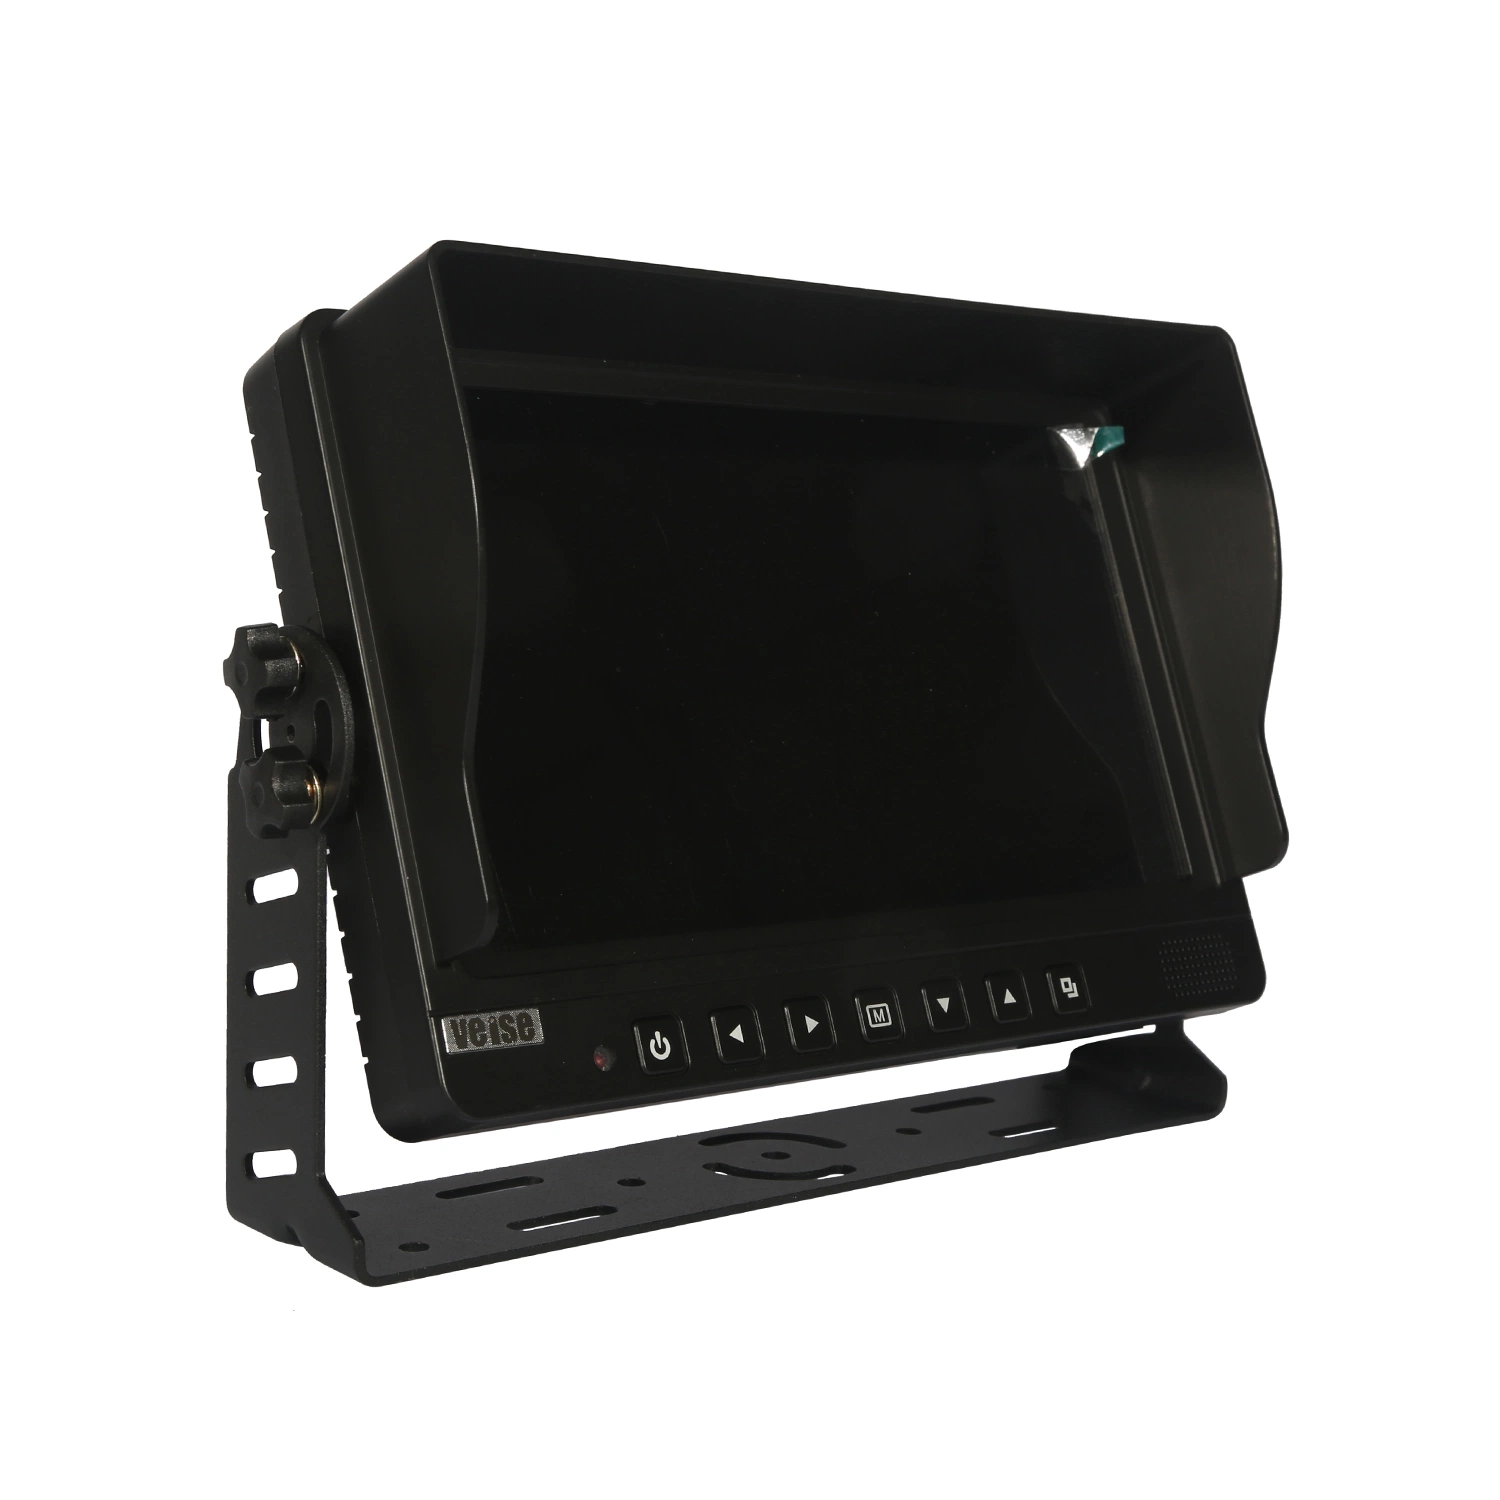 Backup Monitor for Truck Trailer Safety Reversing Camera System